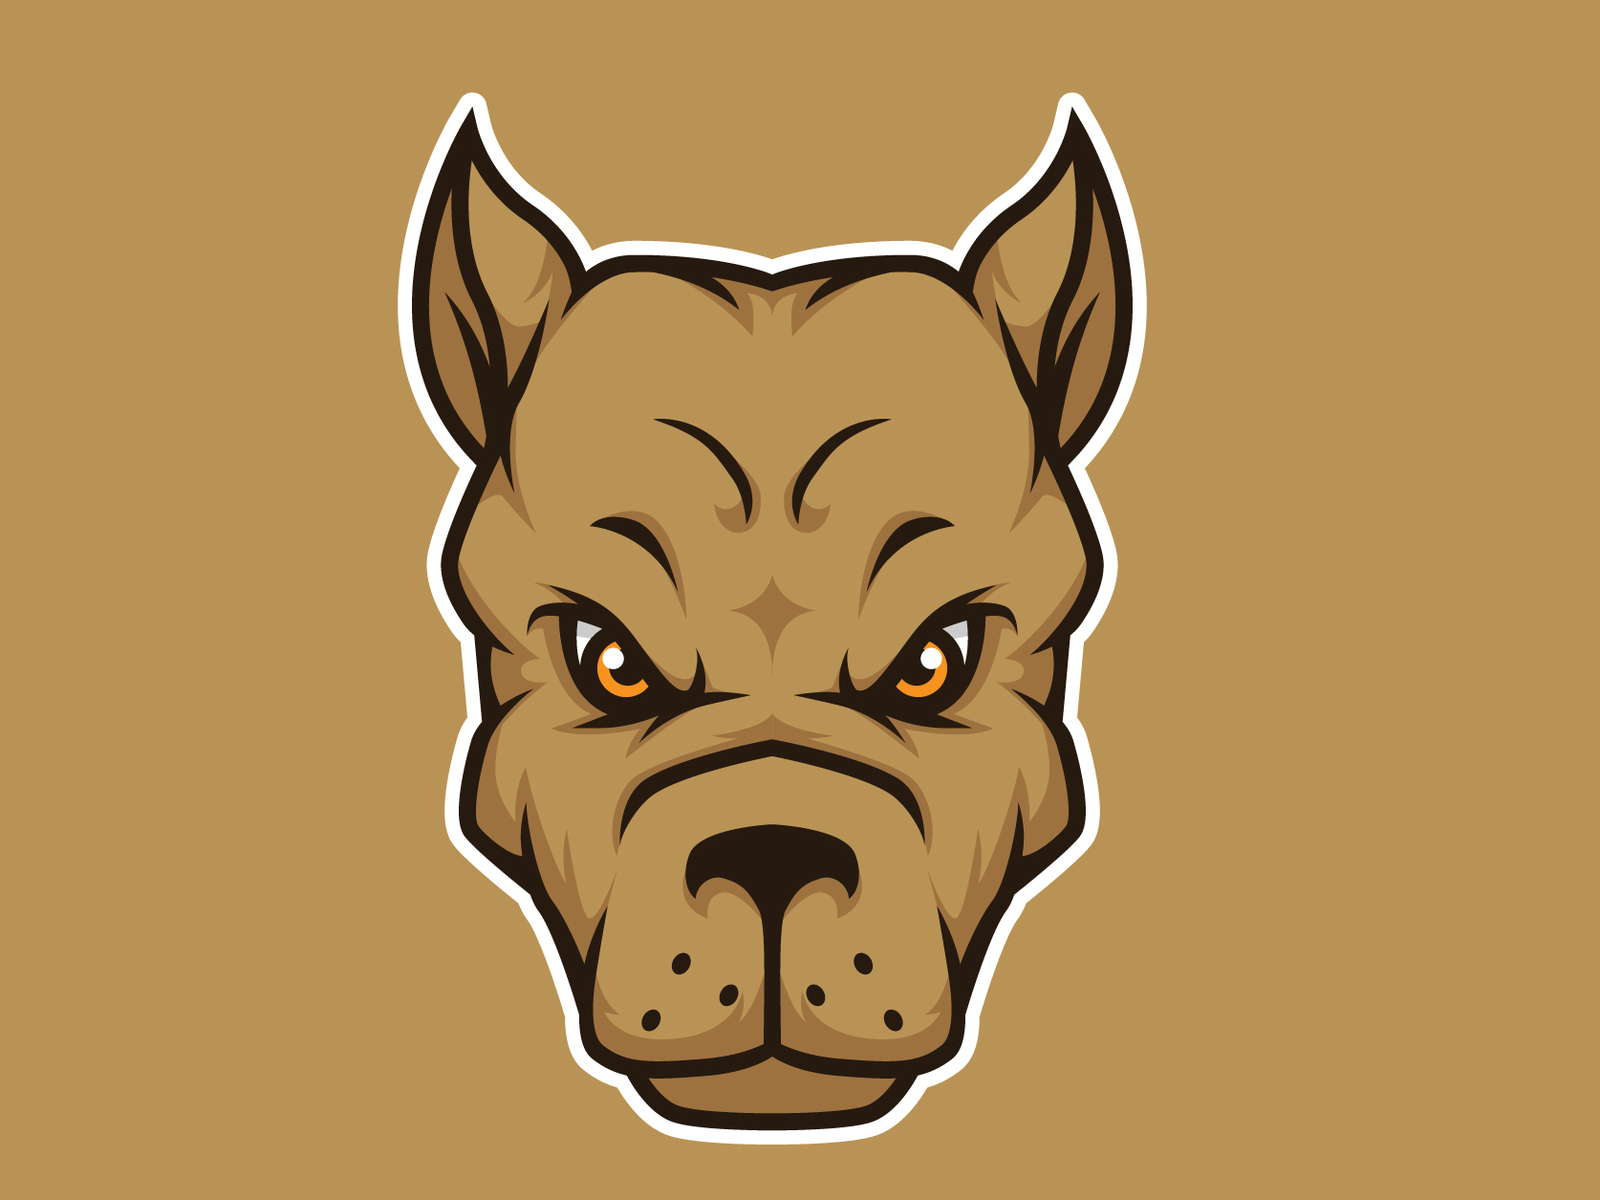 Dog Head Mascot Logo by SB STUDIO on Dribbble